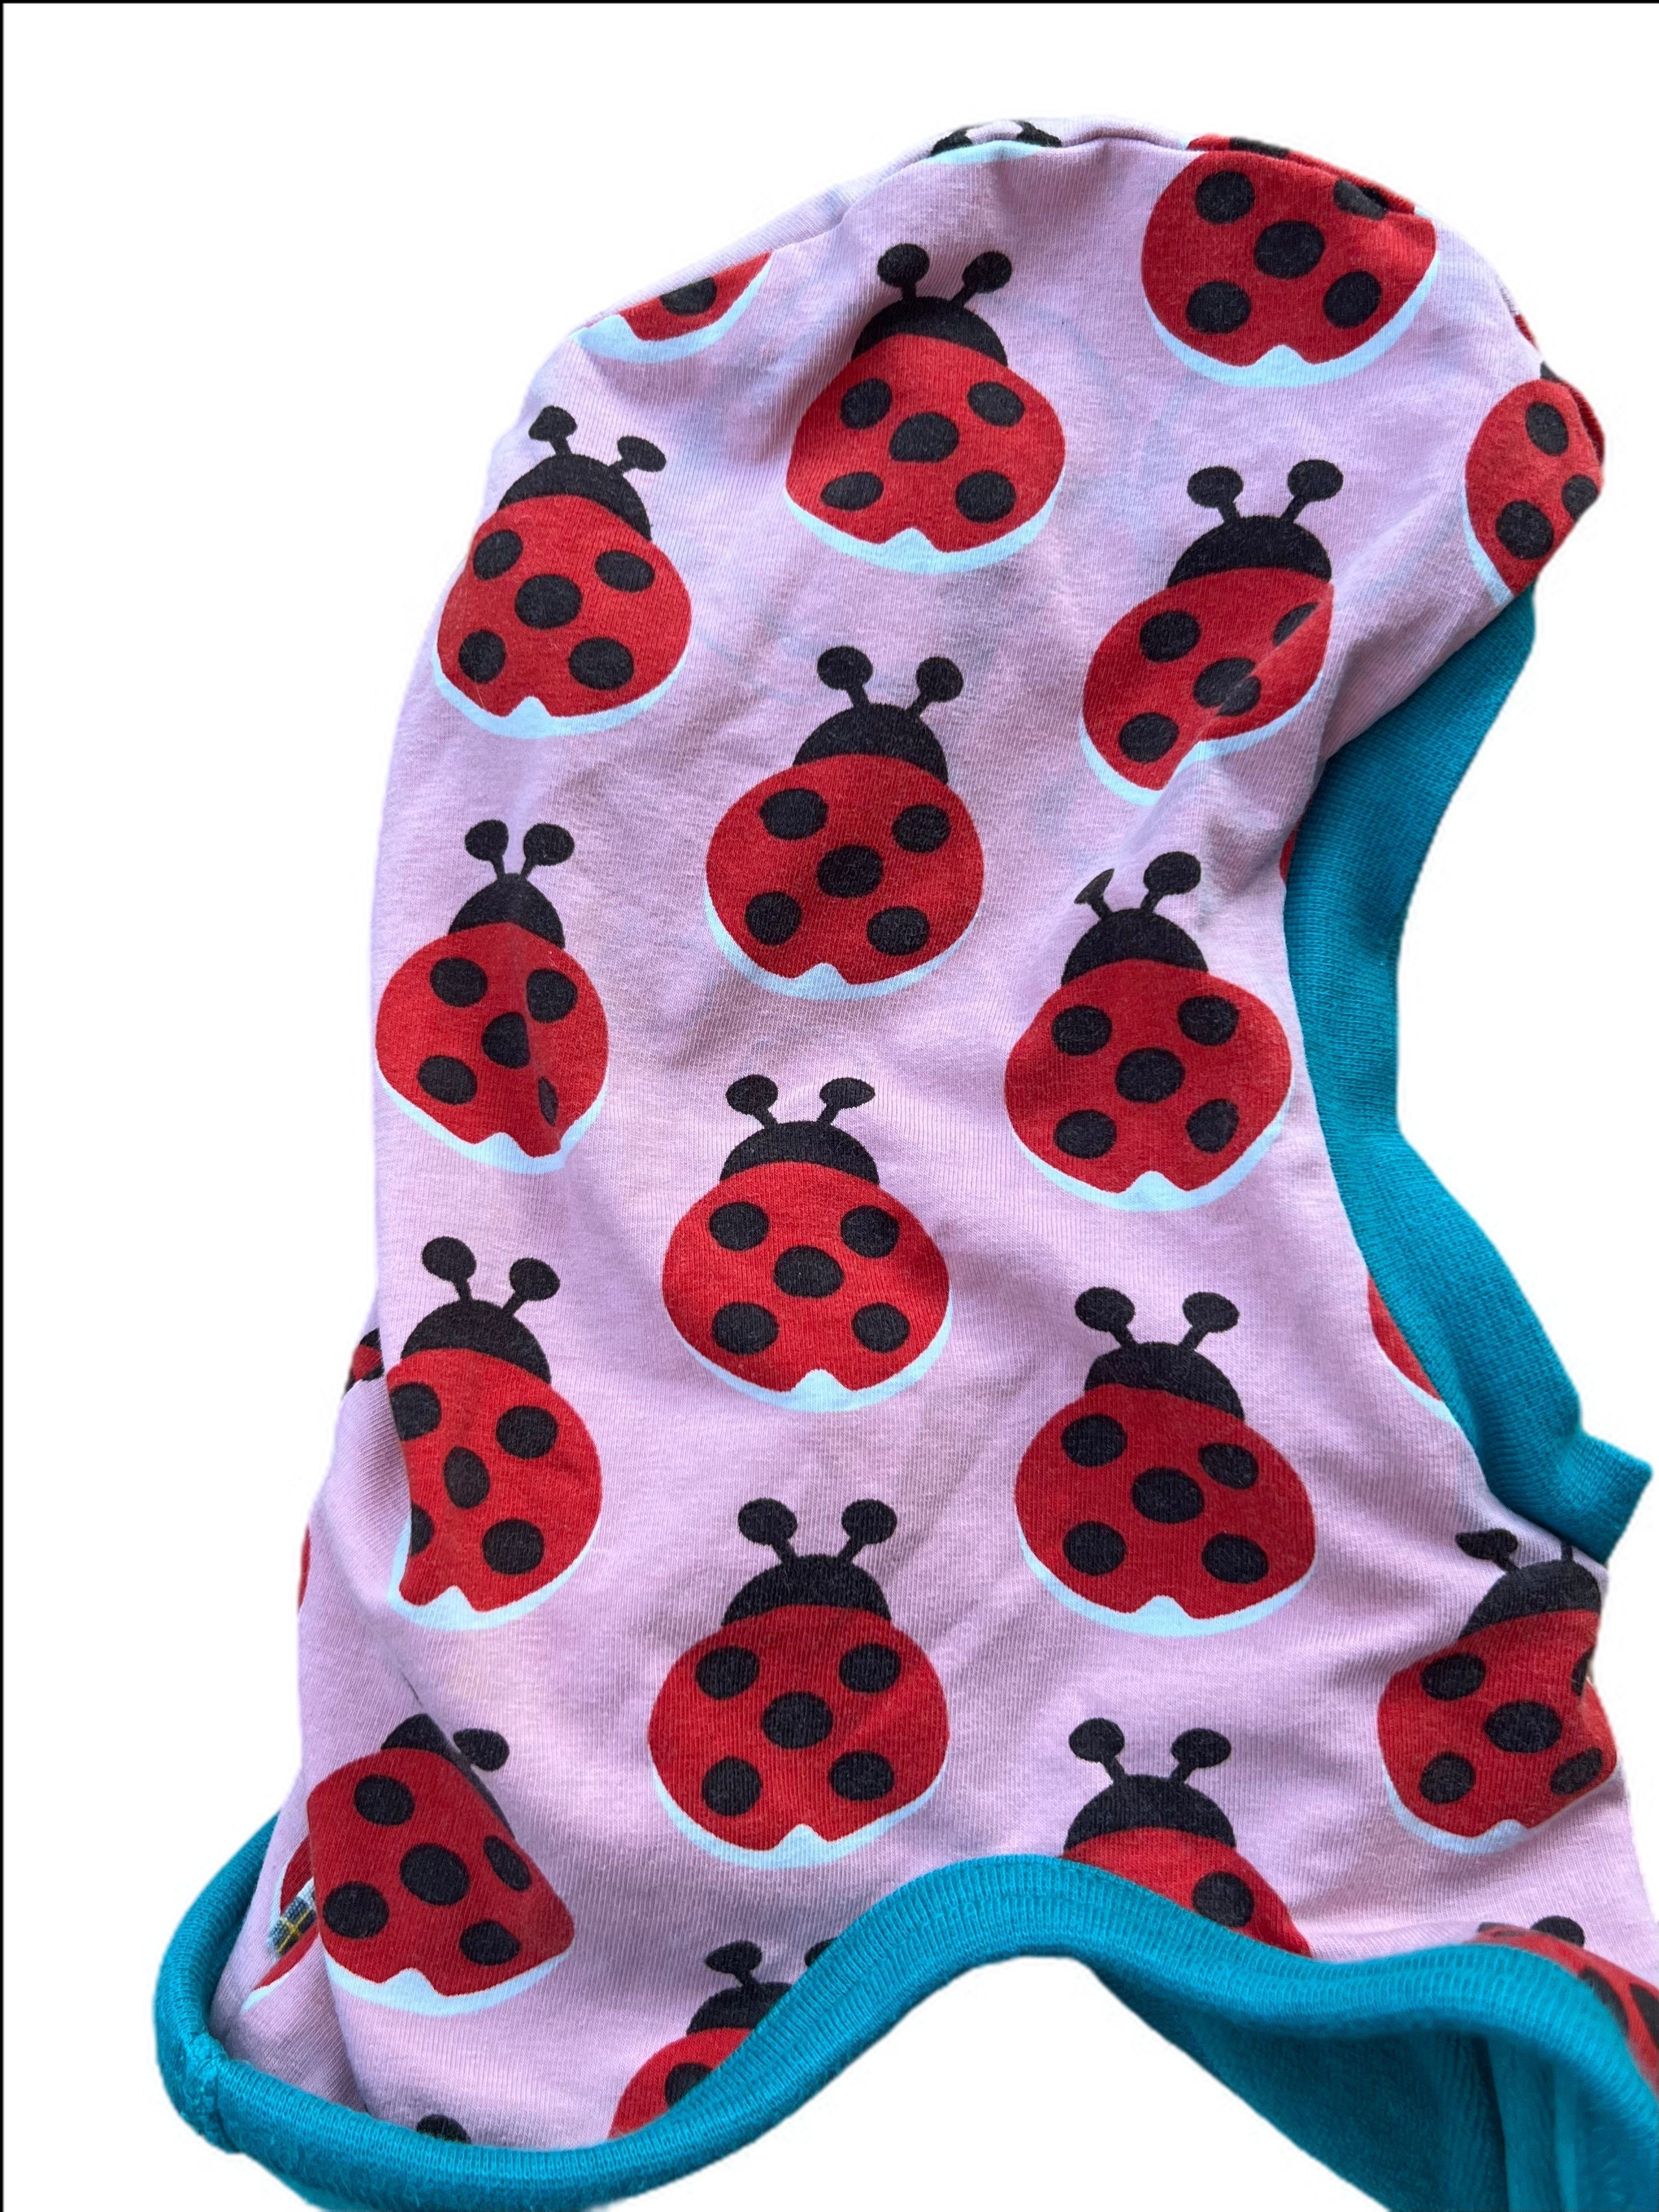 Velour  Lined Balaclava in Ladybug/ Ladybird Print Colour run